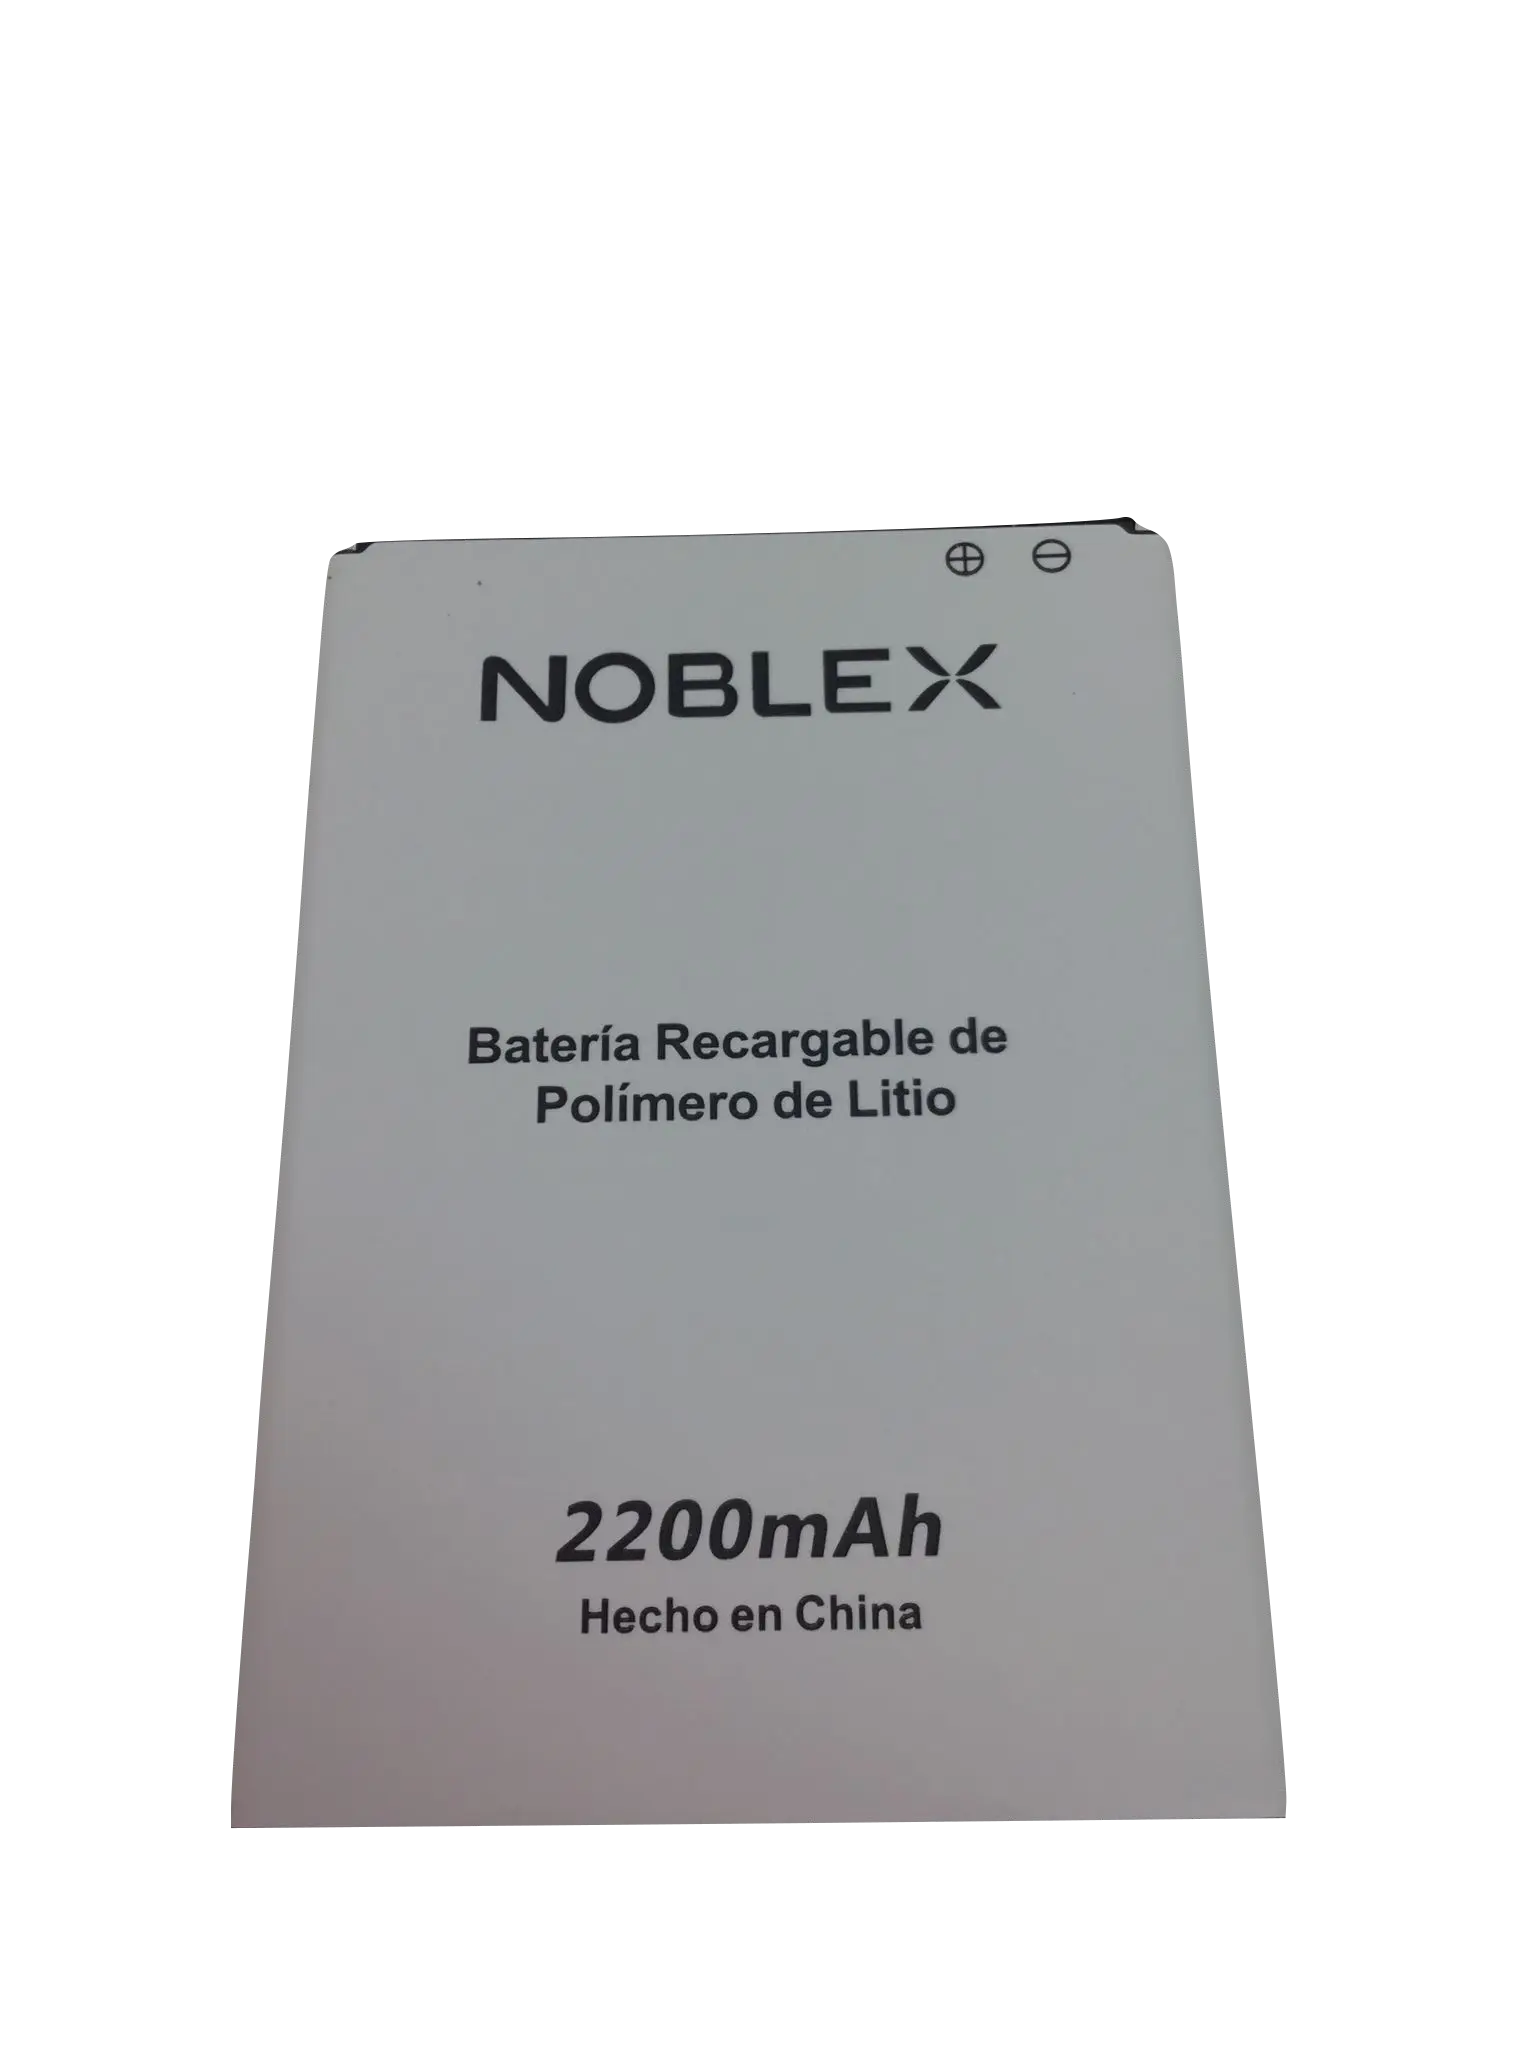 baterias de celular noblex mar del plata - Cómo me comunico con Noblex